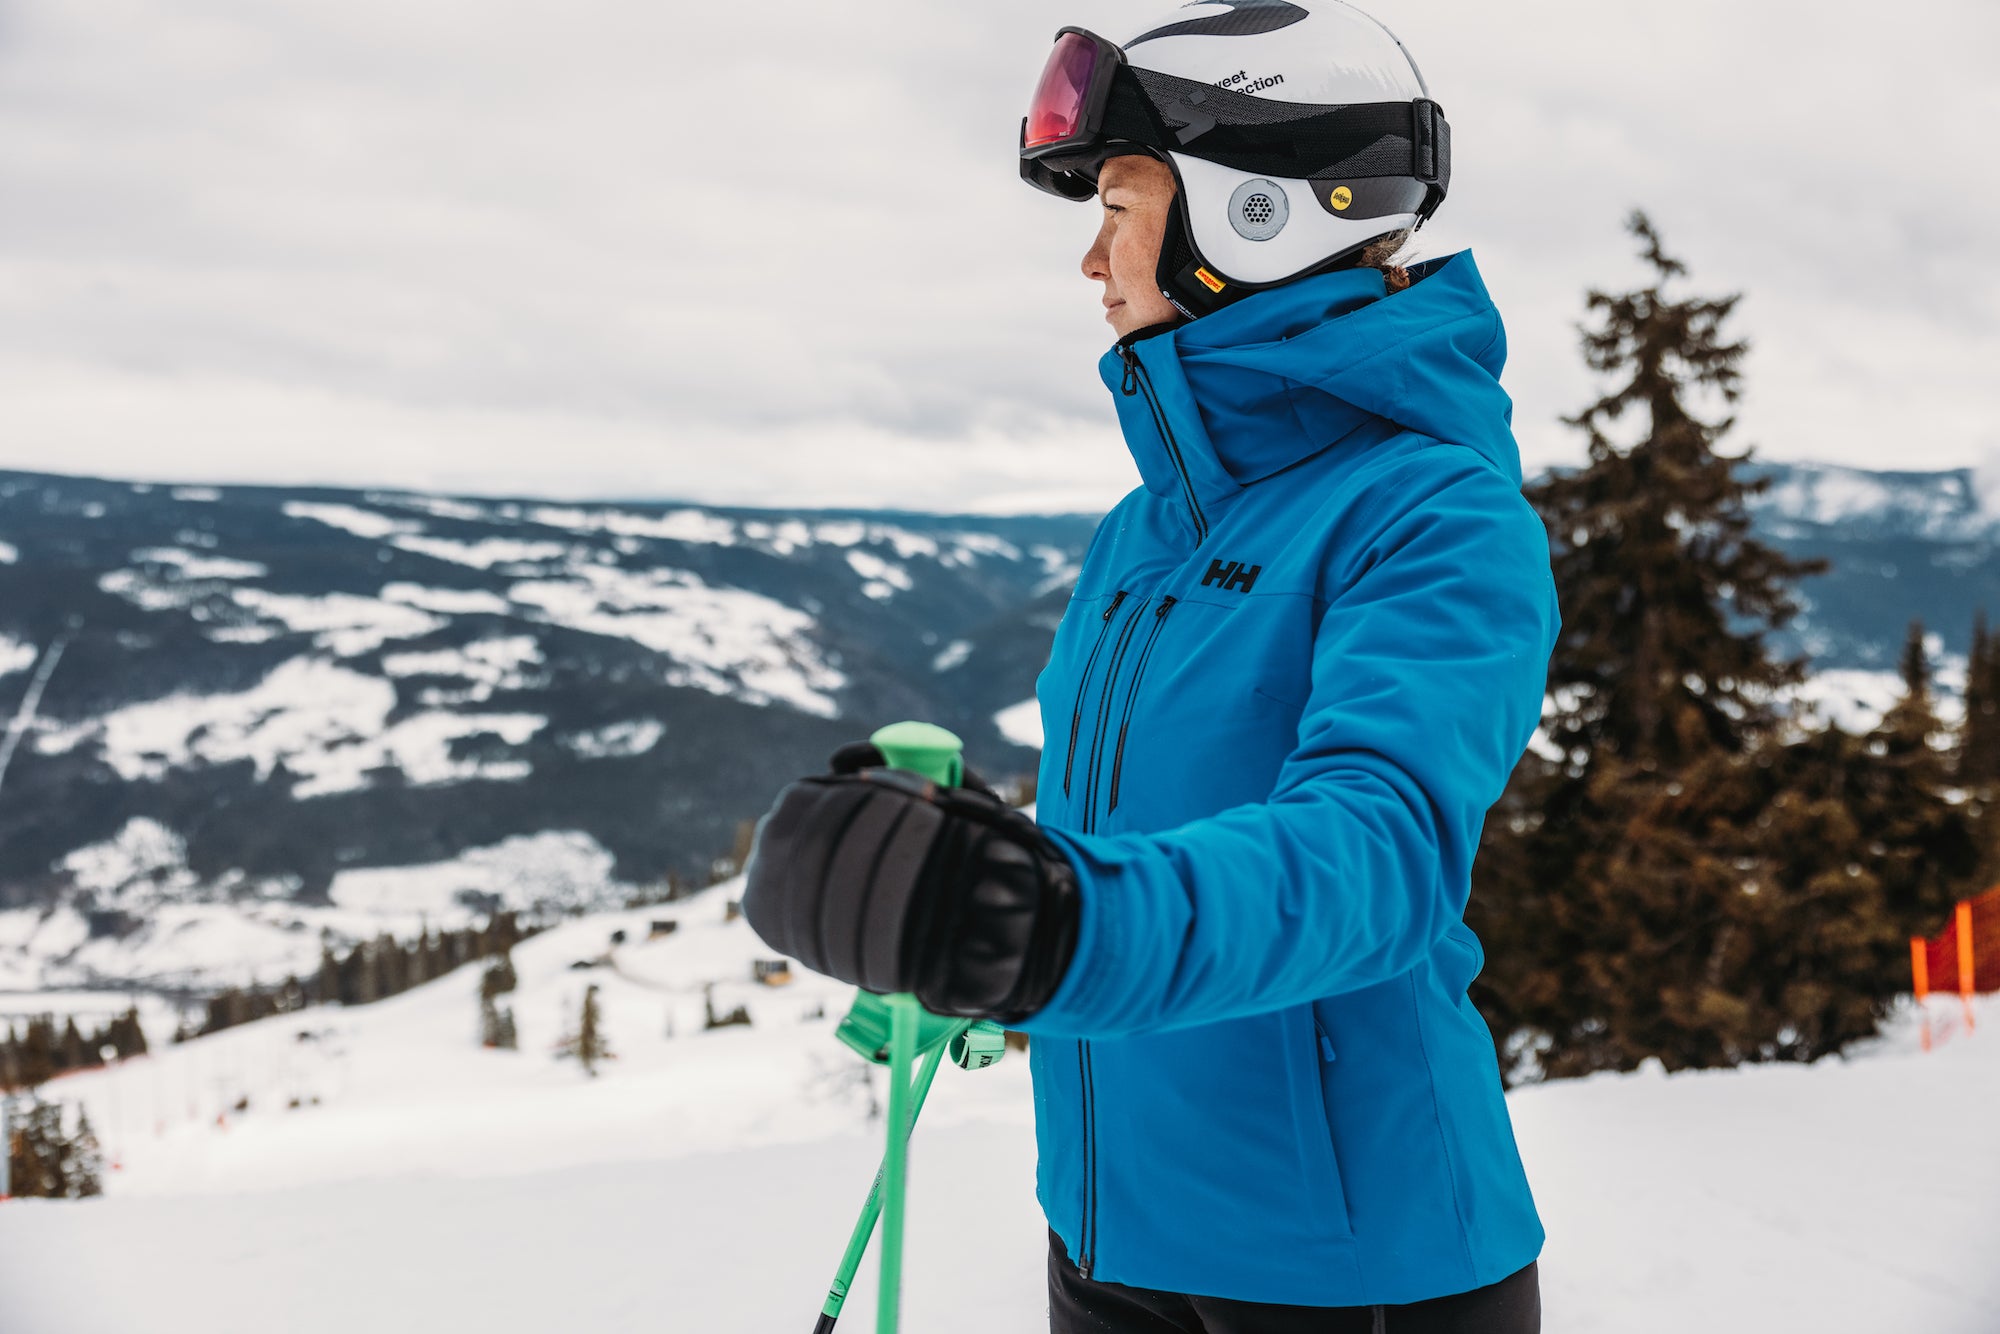 Ski and Snowboard Clothing, Equipment and Servicing - Ski & Sport – Ski  Sport Retail